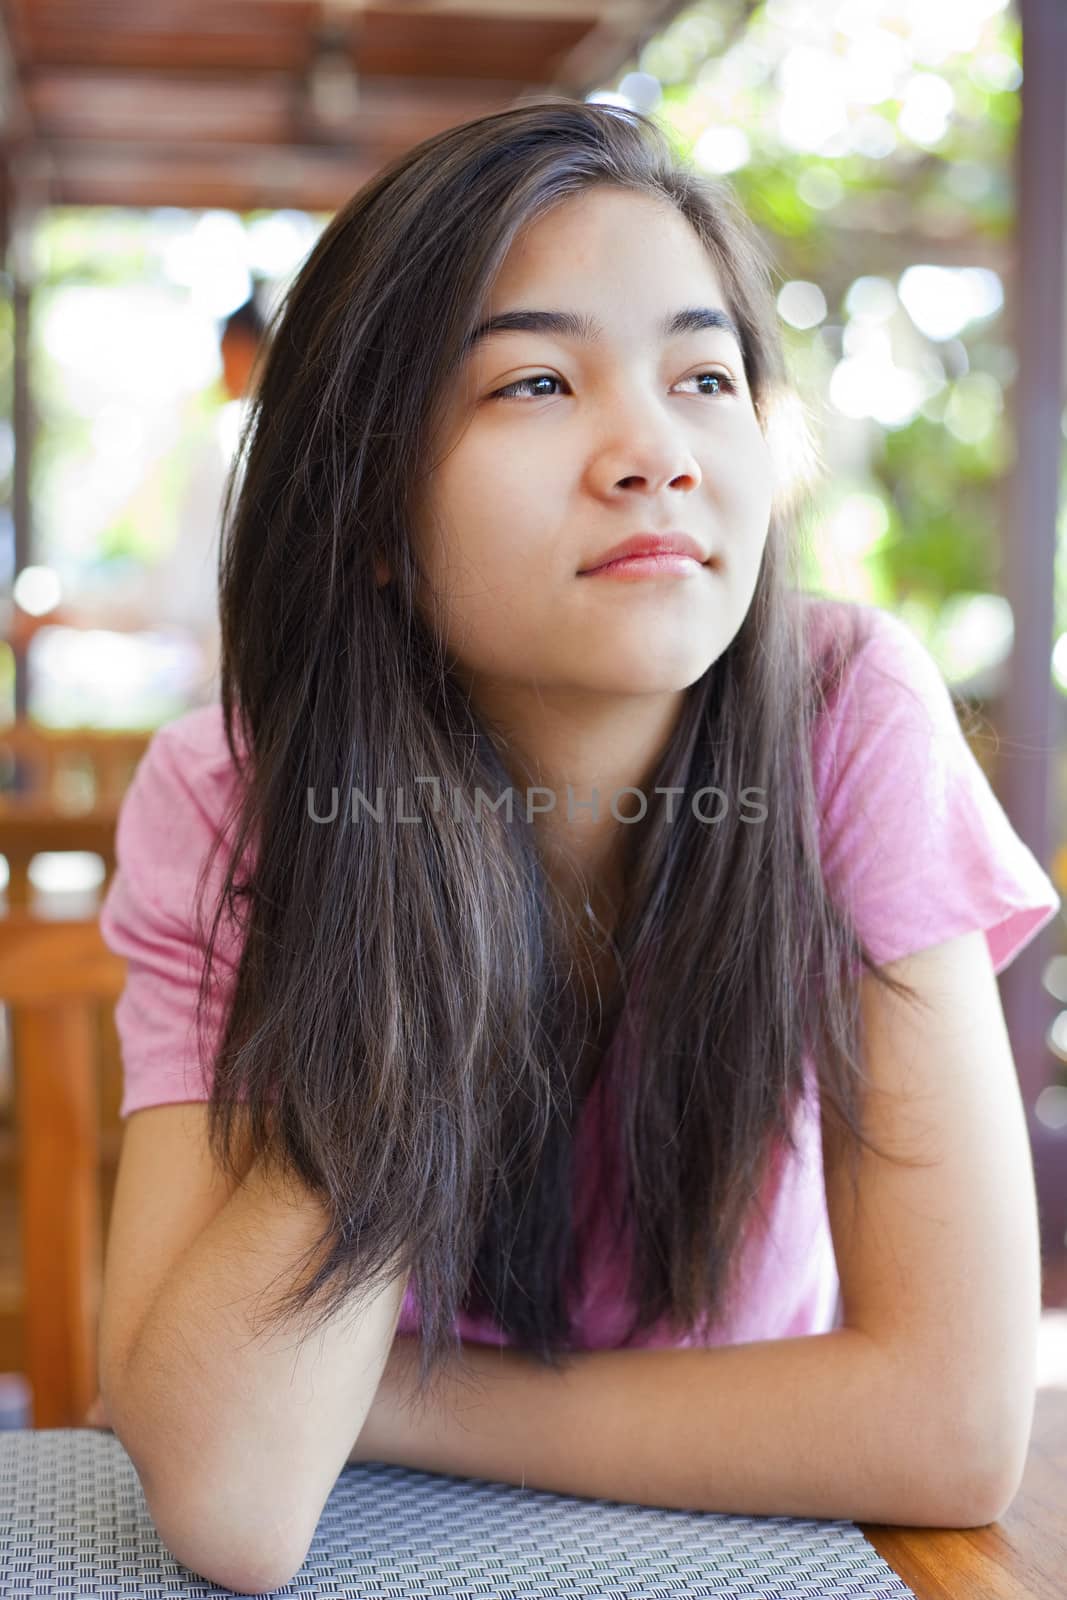 Biracial teen girl sitting at table, thinking, looking up